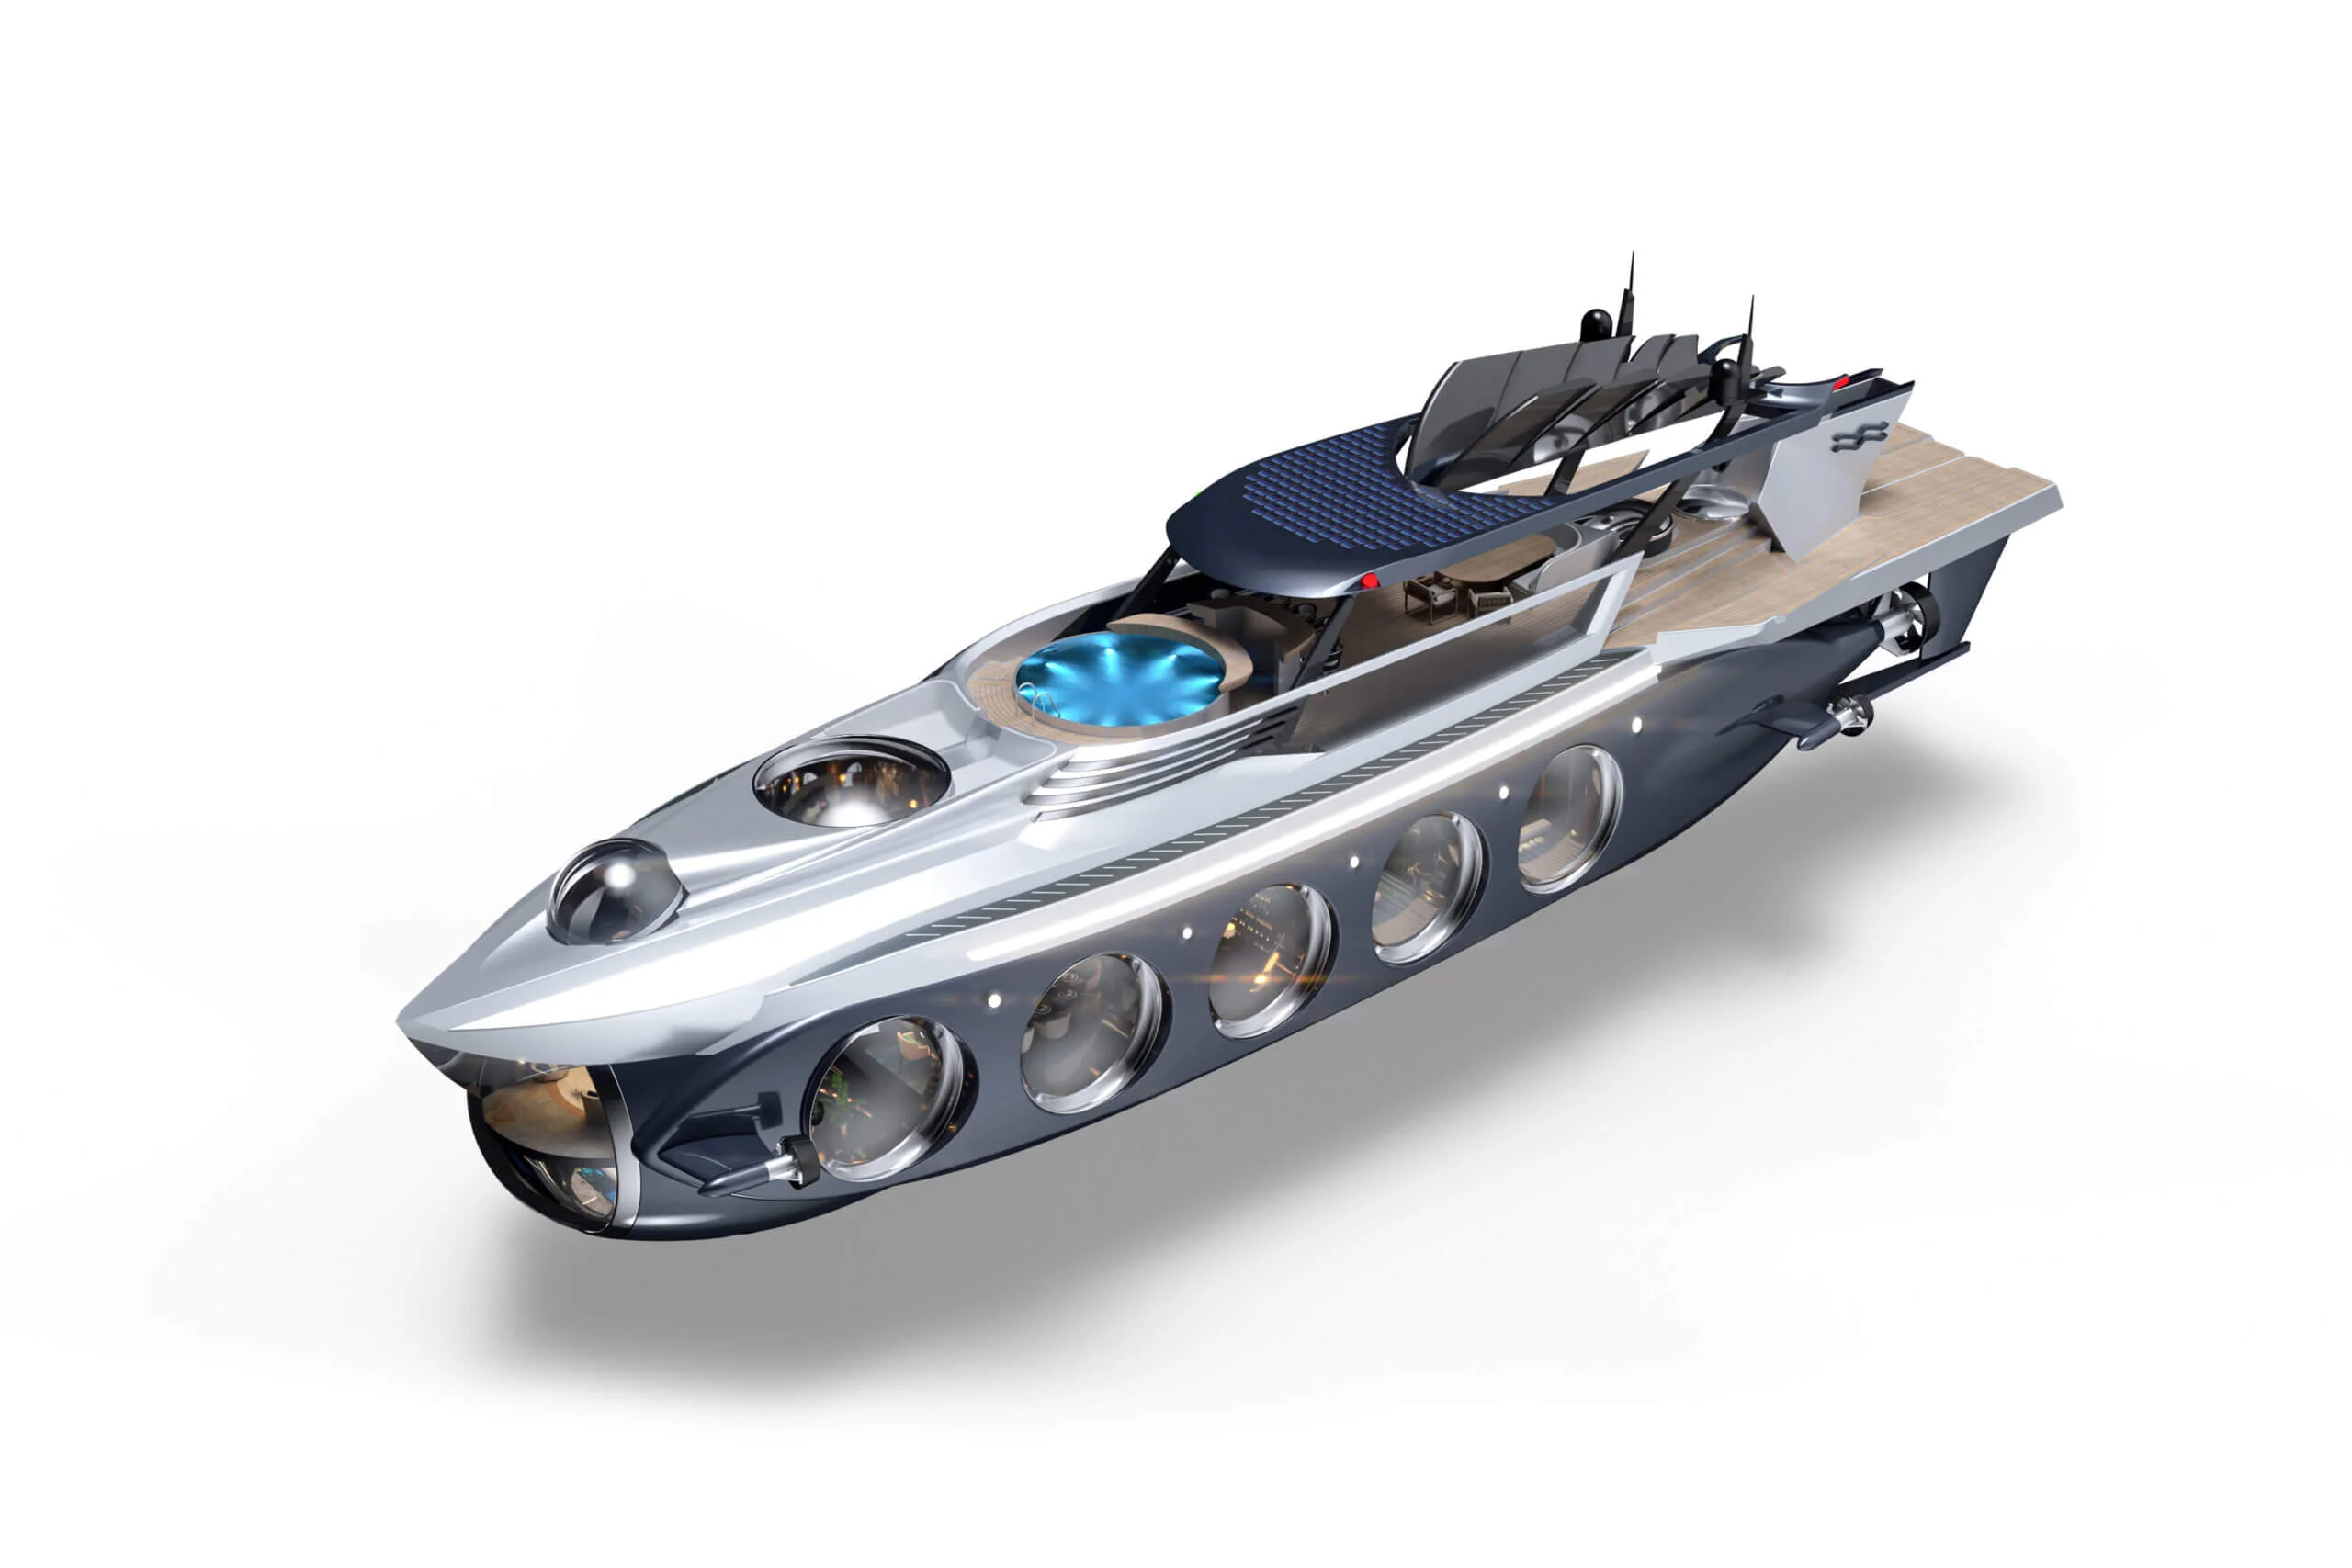 Home - Nautilus Submarine